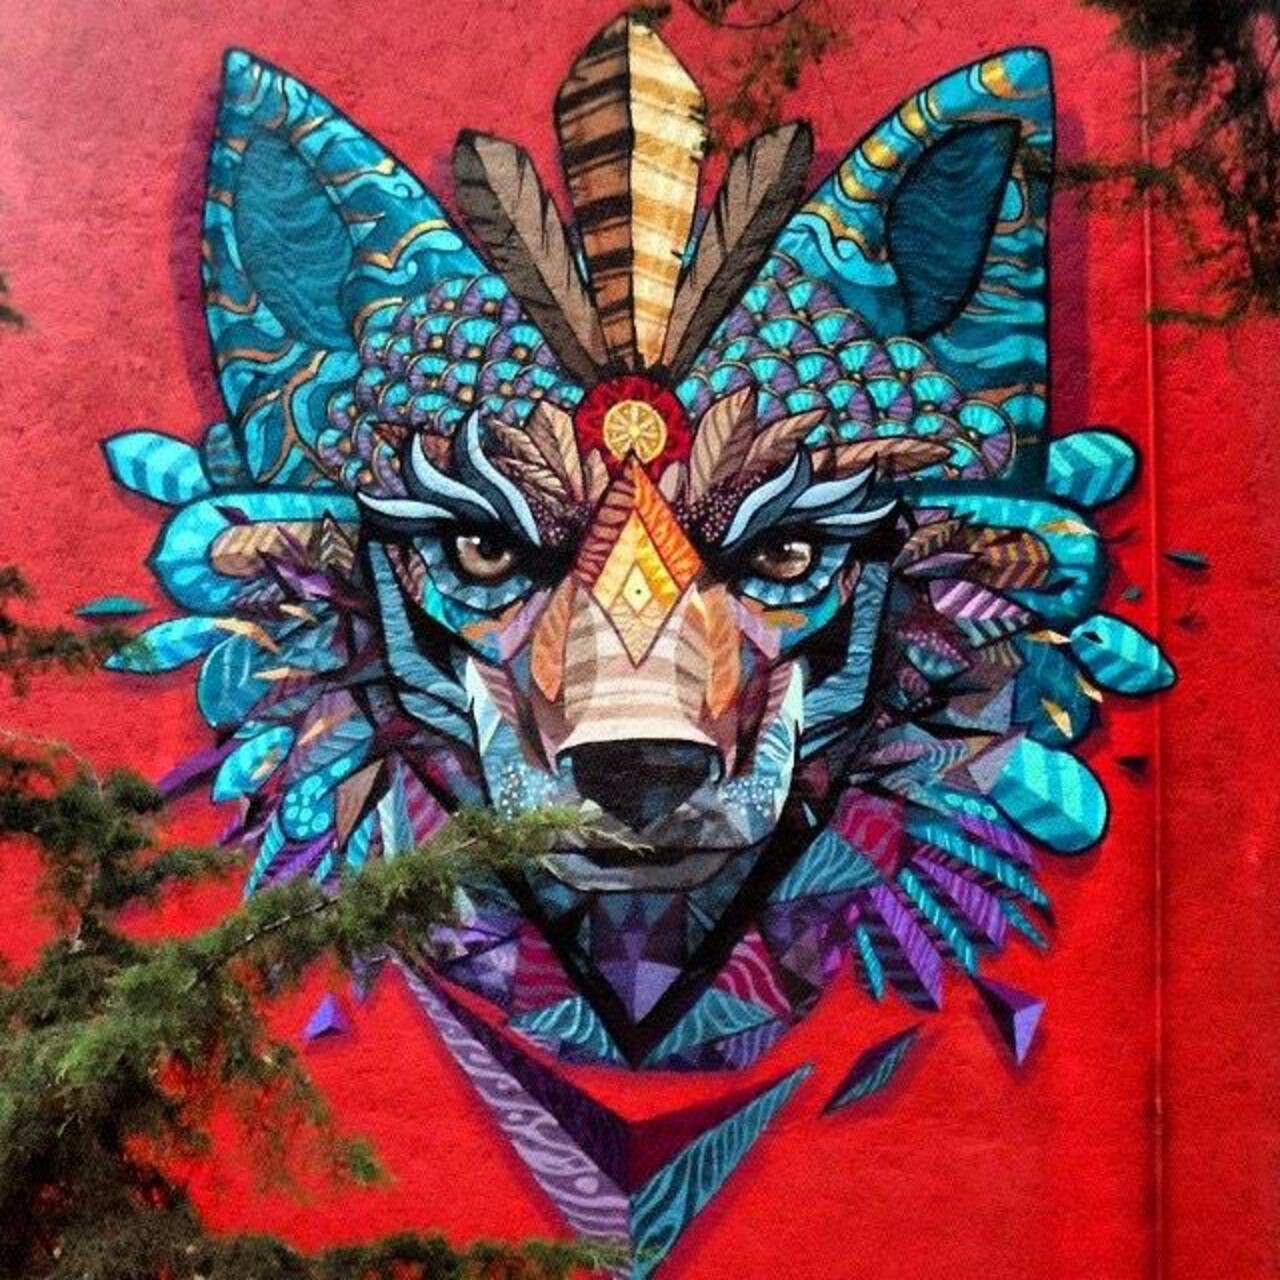 #HappyValentinesDay #Mexico #FaridRueda #Aztec #Style #Red #Dope #Art #Mural #Graffiti #Street #Urban #Treats  http://t.co/bRHF4teMhG